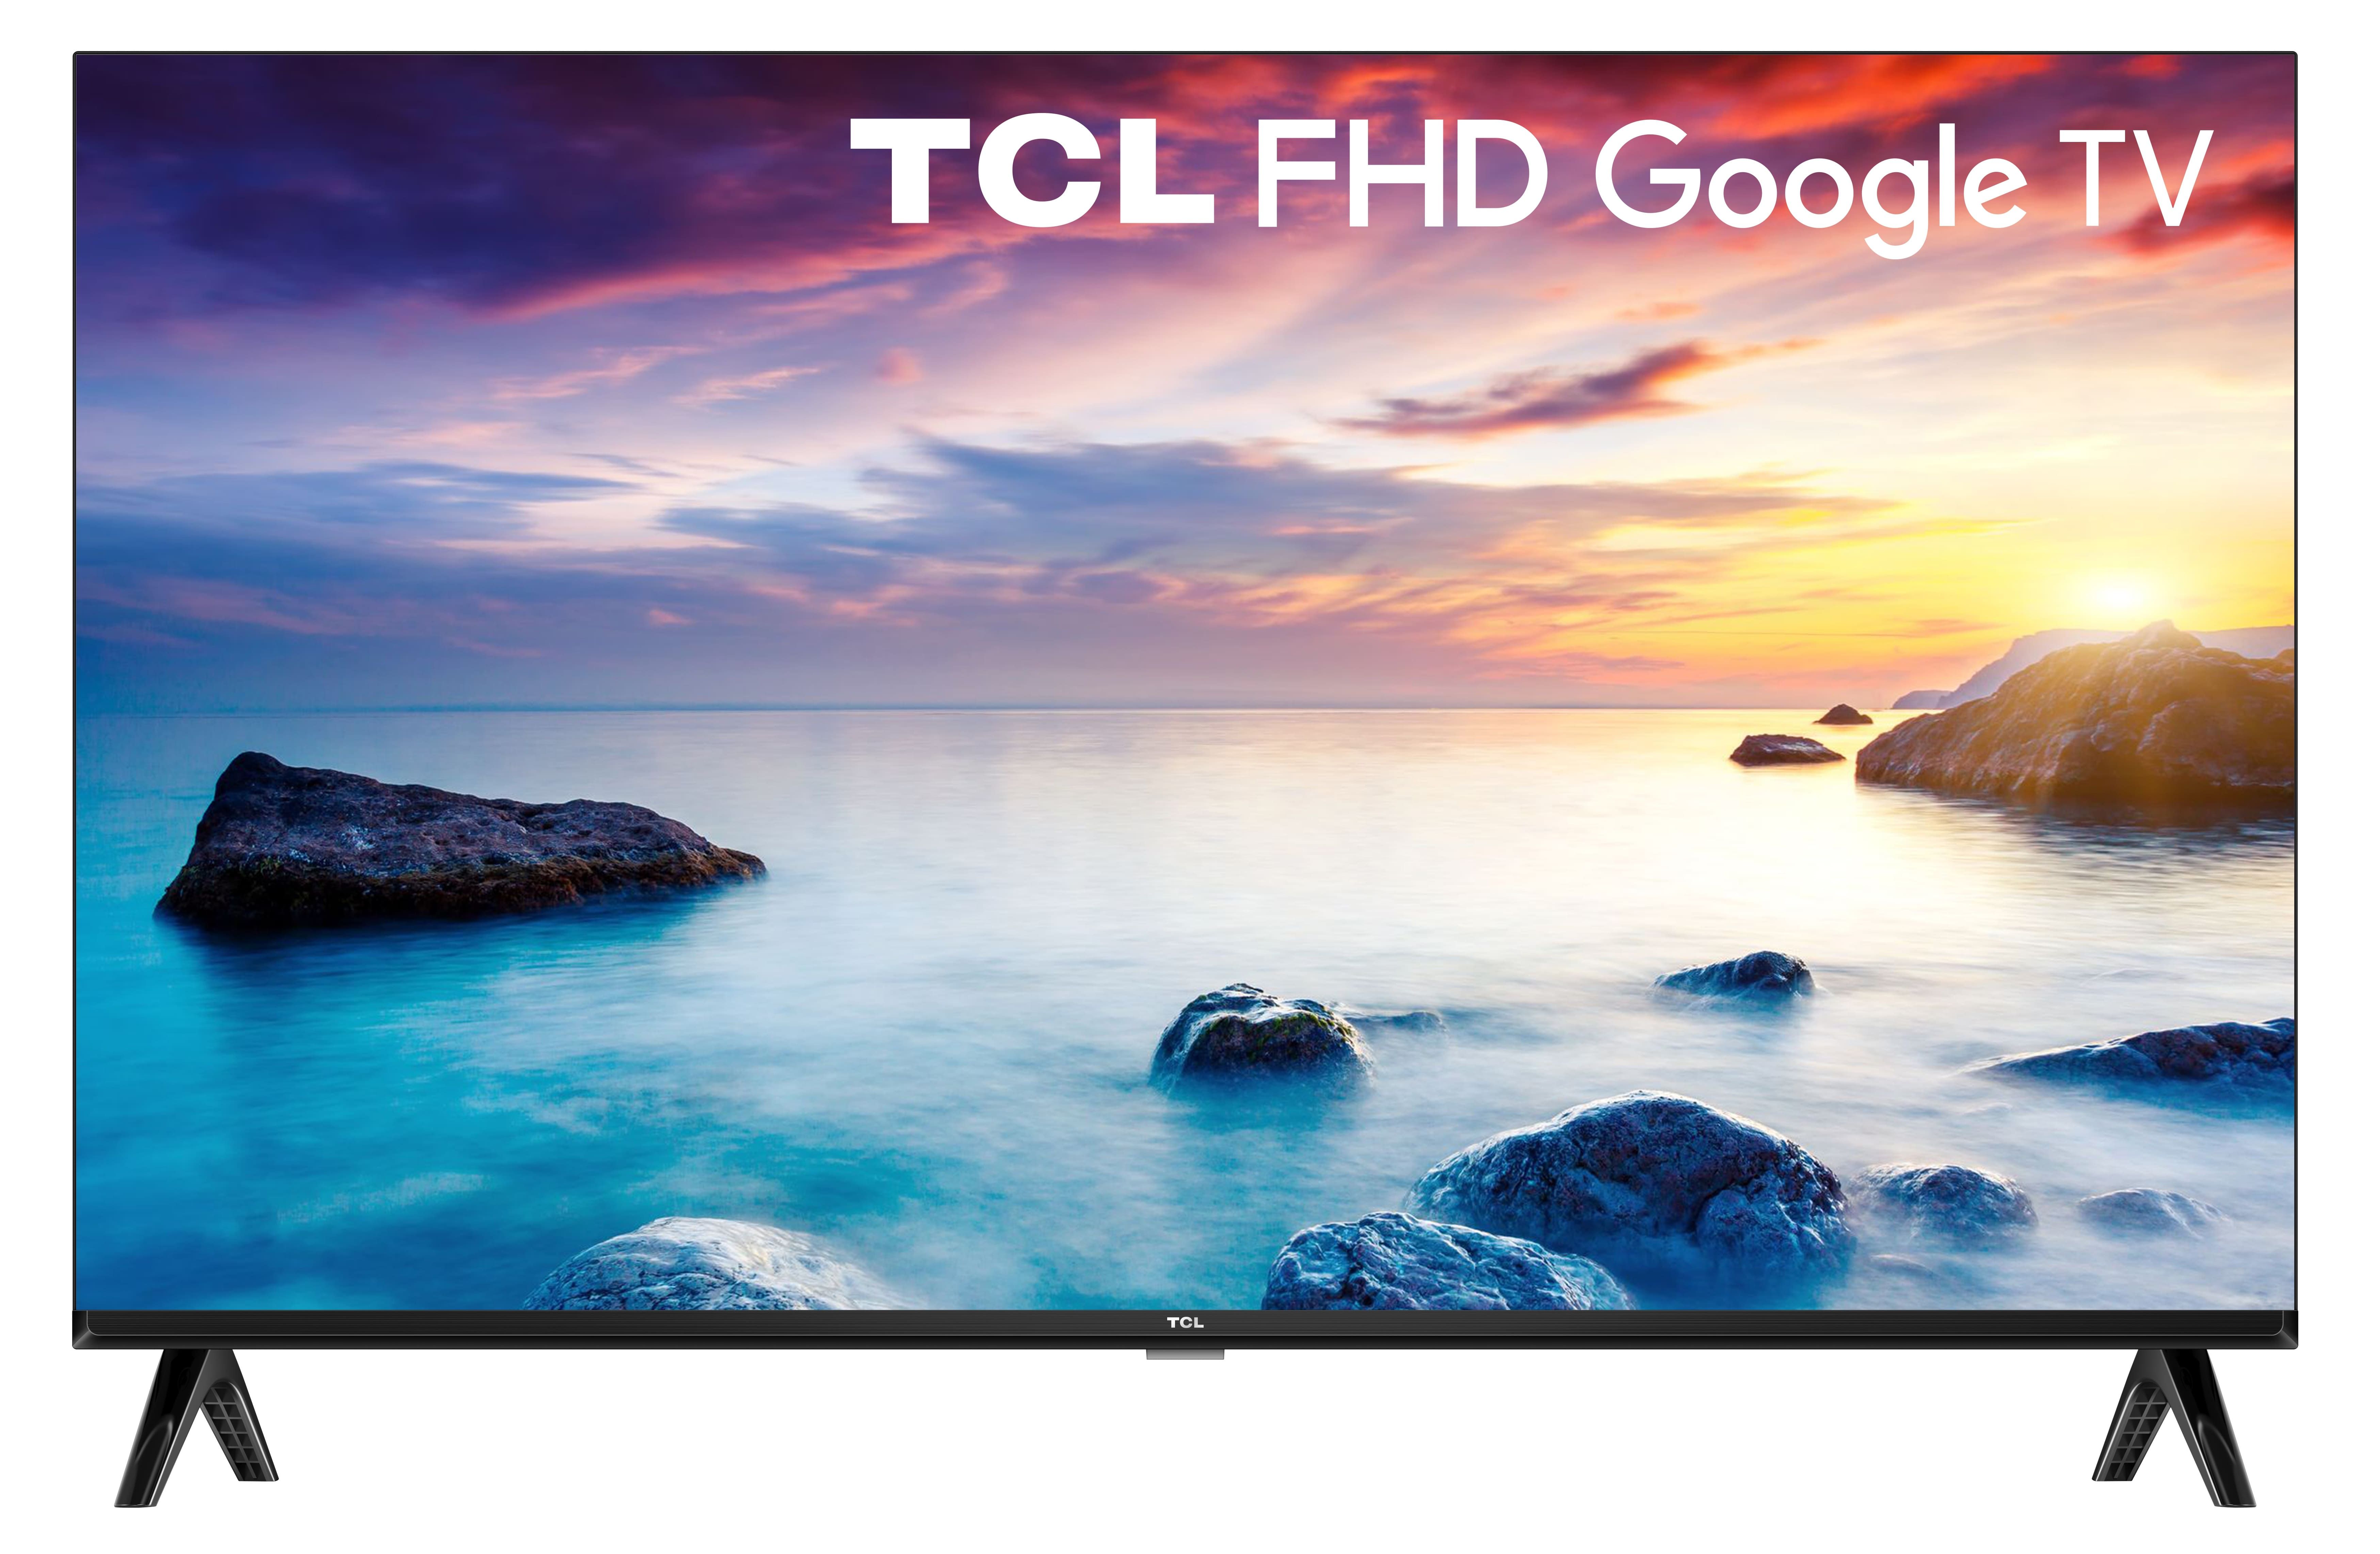 TCL - 32S5400 32吋全高清谷歌智能電視S5400 Google TV | The Club 